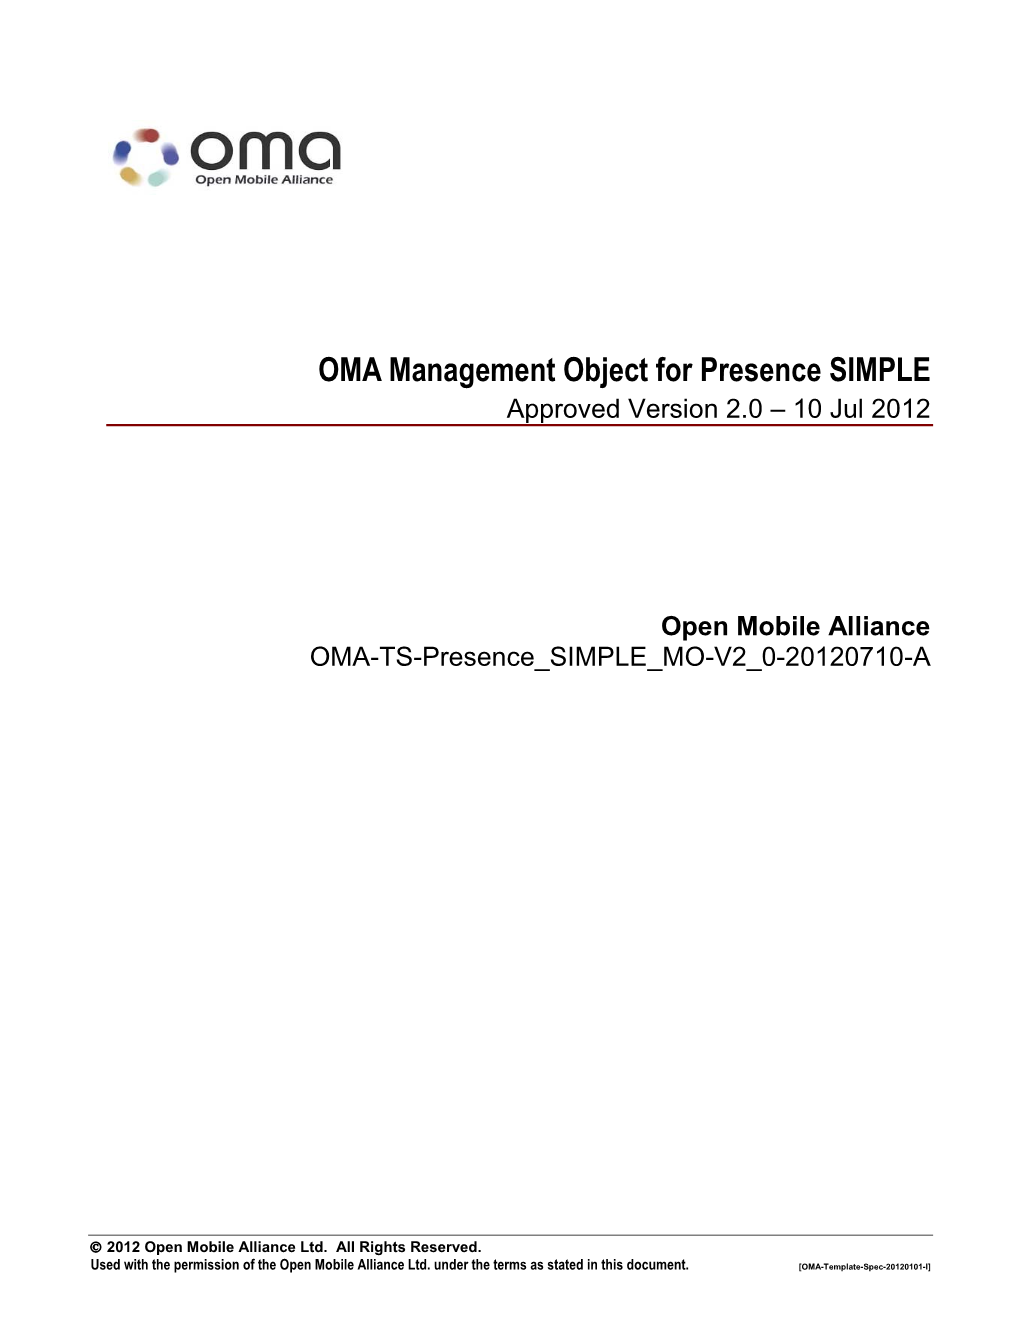 10 Jul 2012 Open Mobile Alliance OMA-TS-Presence SIMPLE MO-V2 0-20120710-A